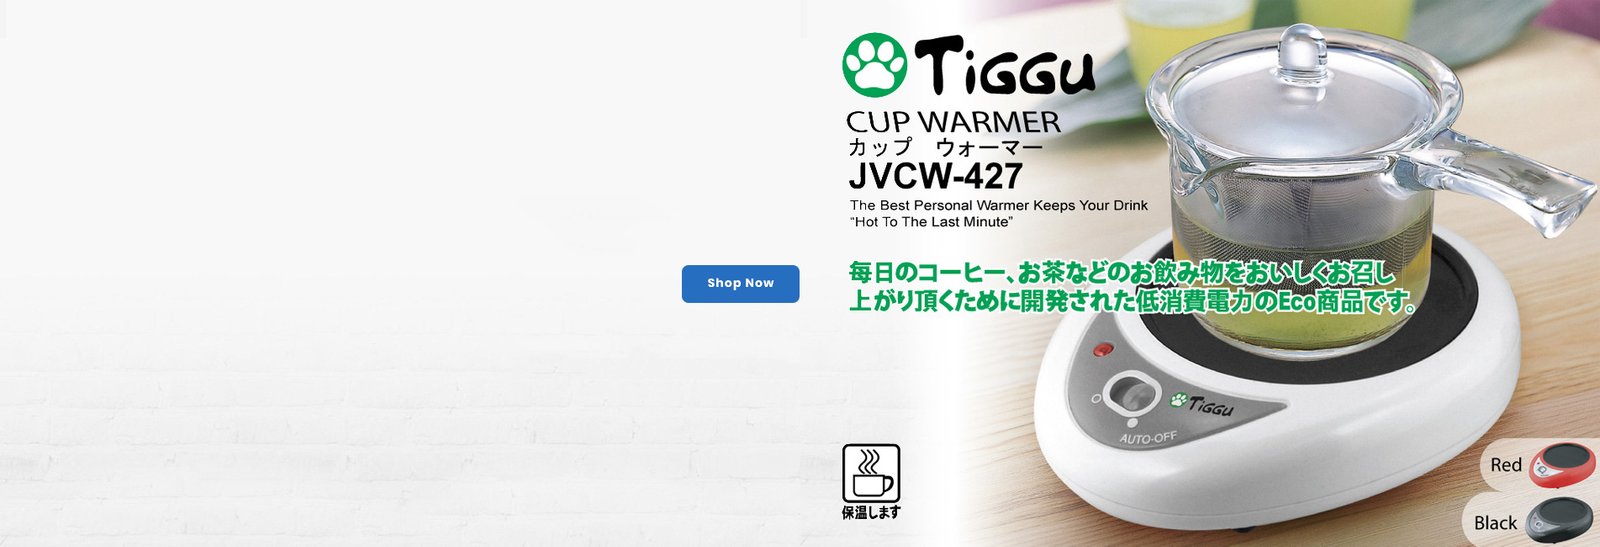 Cup Warmer - JVCW-427